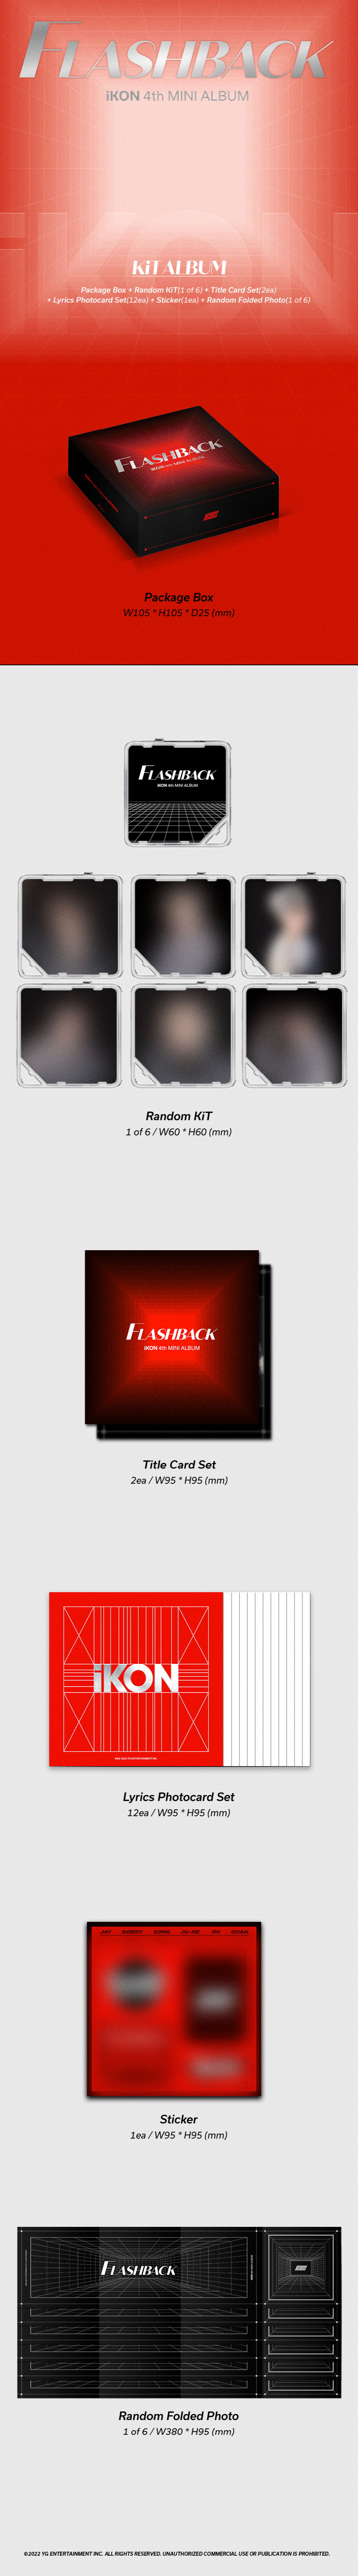 iKON - FLASHBACK (KiT Album) / 4th MINI ALBUM ikon flashback iKONcd iKONalbum iKONFLASHBACK FLASHBACKcd